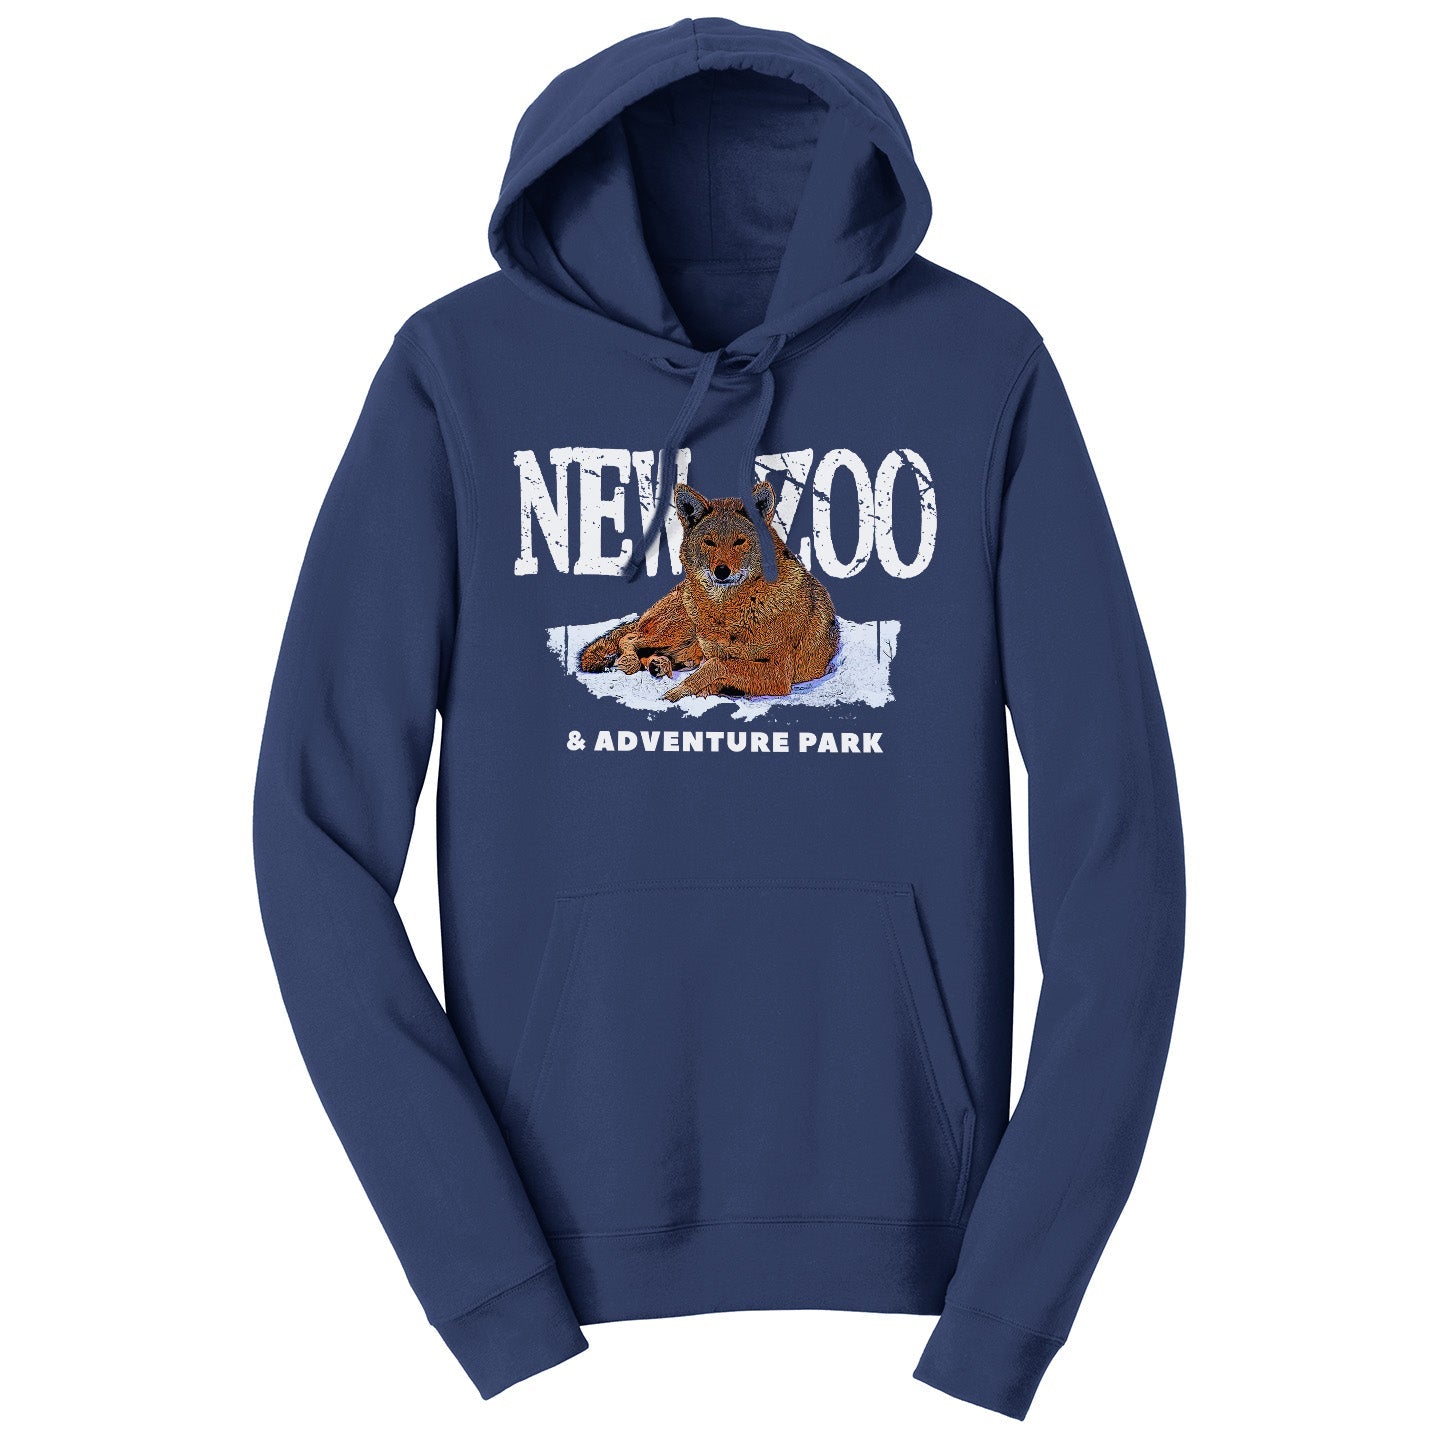 NEW Zoo & Adventure Park - NEW Zoo Red Wolf Art - Adult Unisex Hoodie Sweatshirt